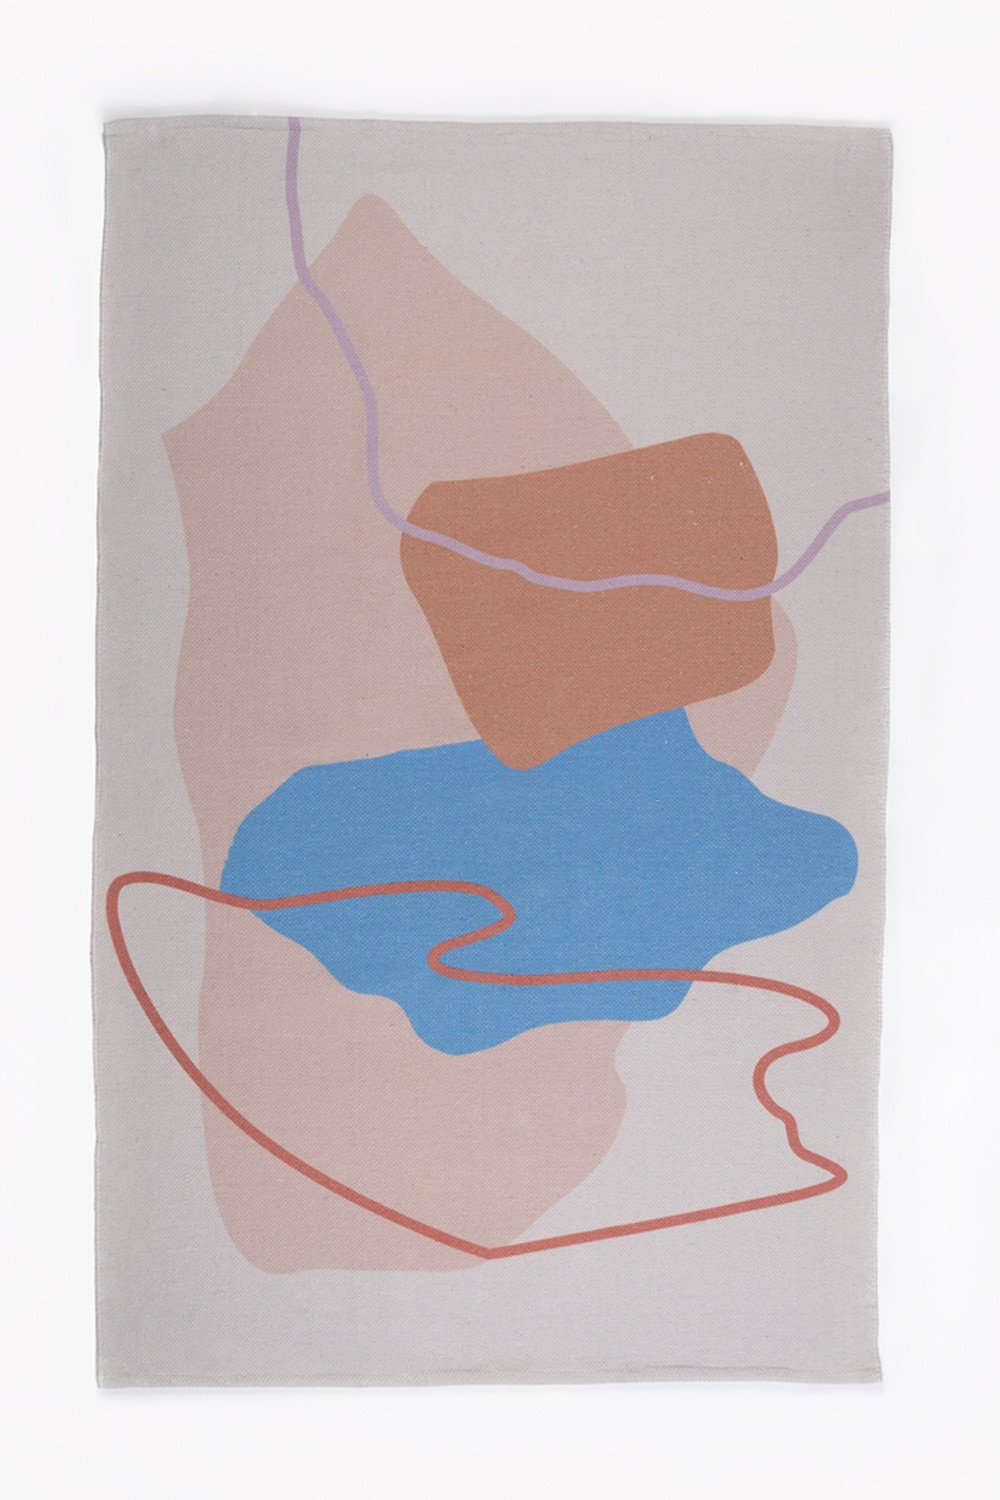 Katoenen vloerkleed (188x119 cm) Kandi, galerij beeld 1